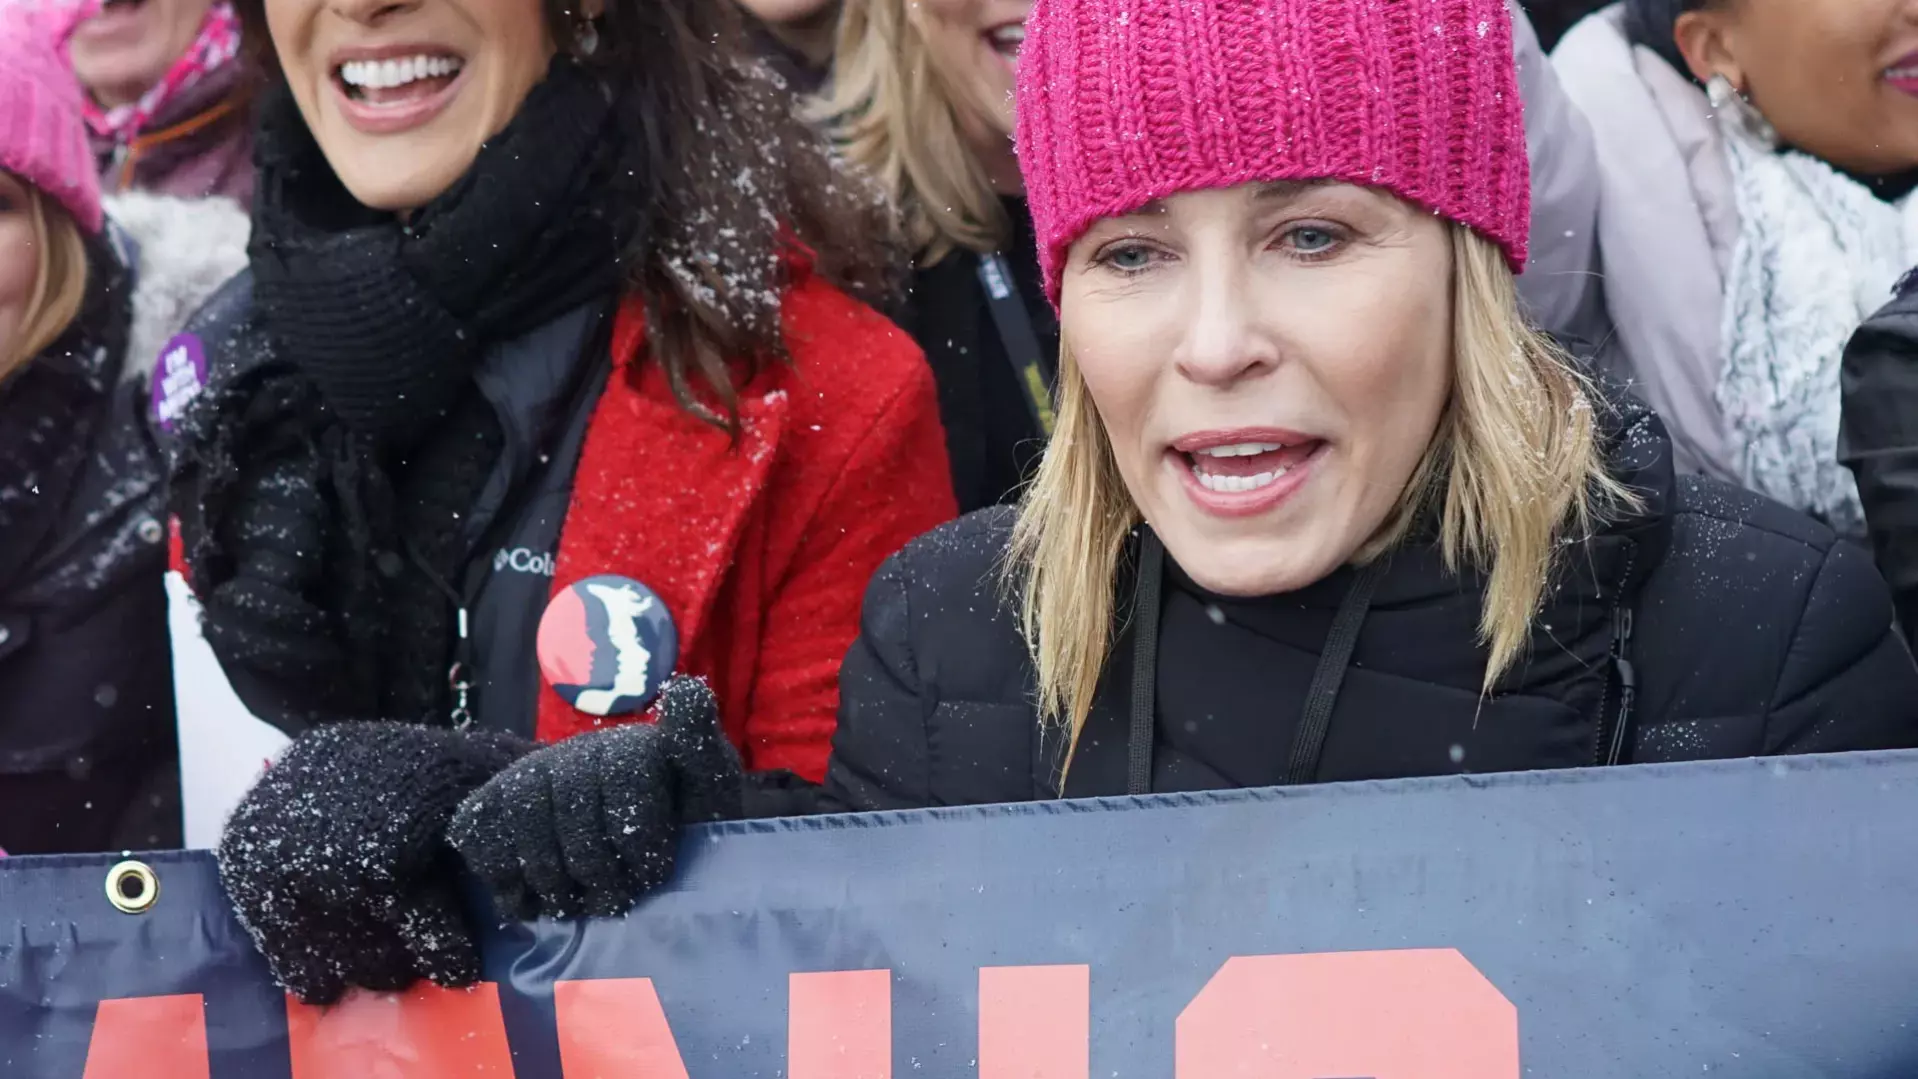 Chelsea Handler faces backlash over her political views